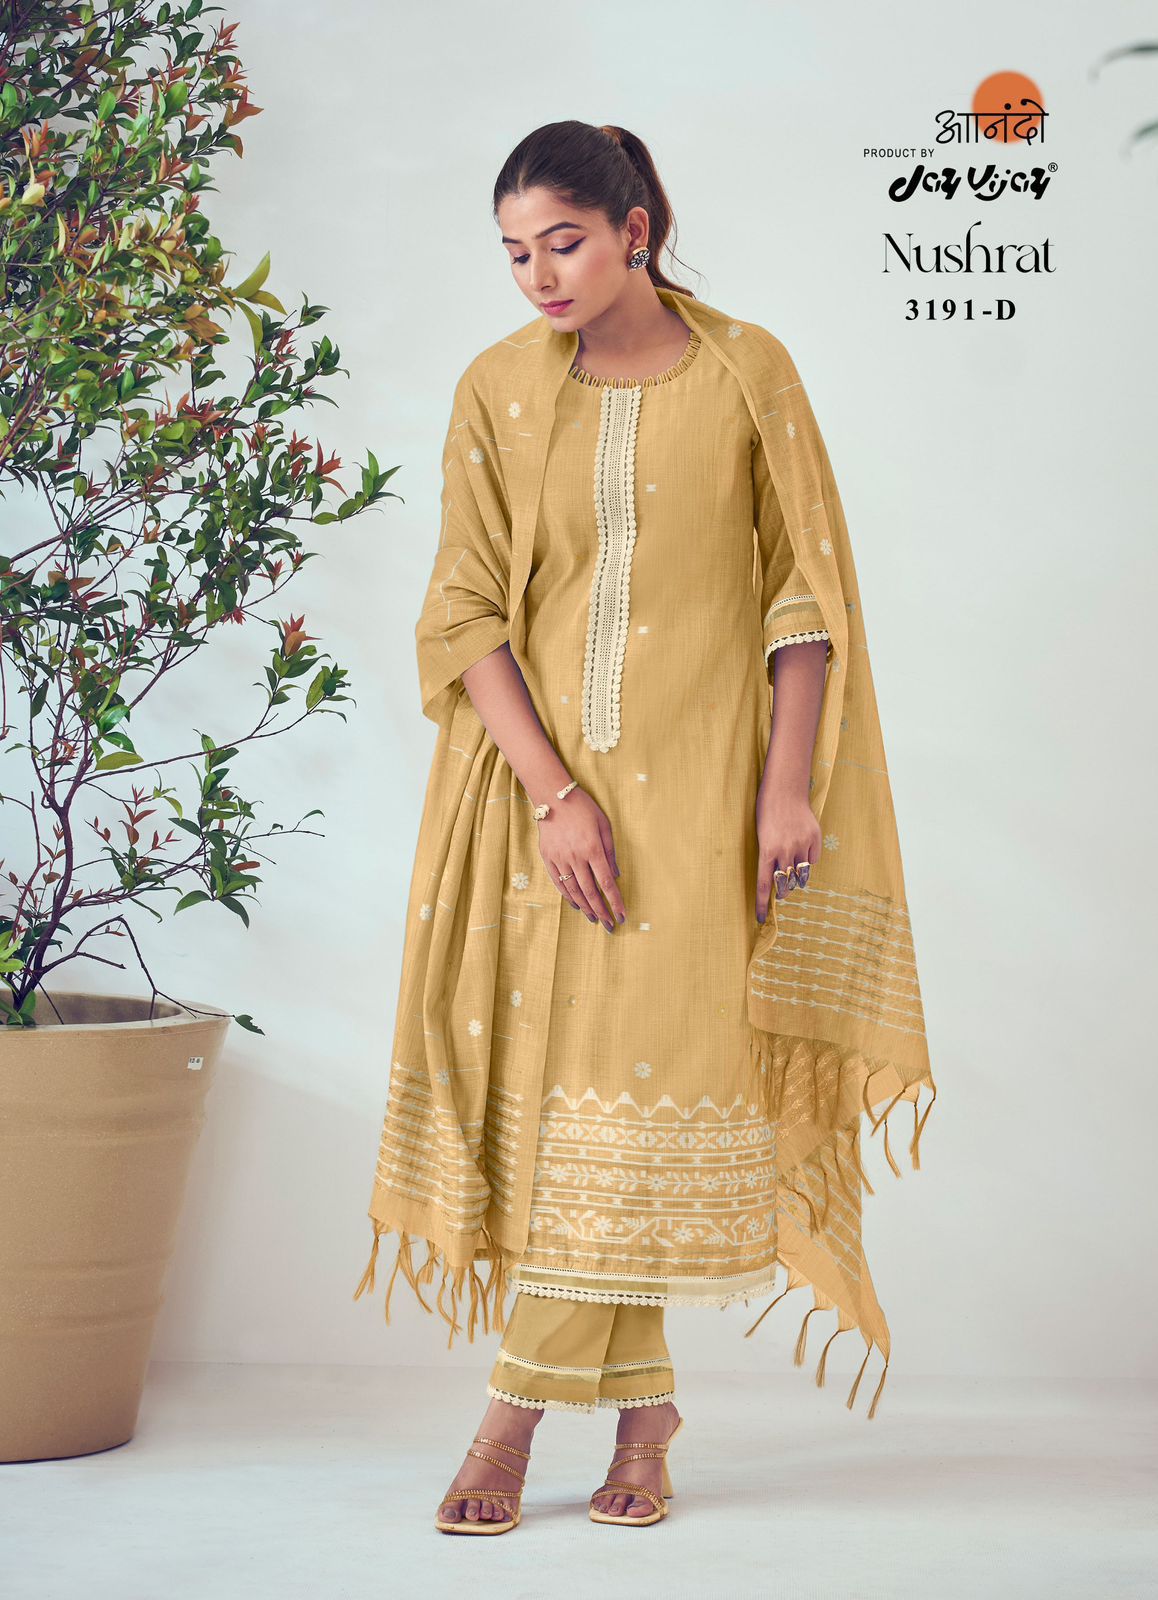 Jay Vijay Nusrat D - South Cotton Dyed Jacquard Suit